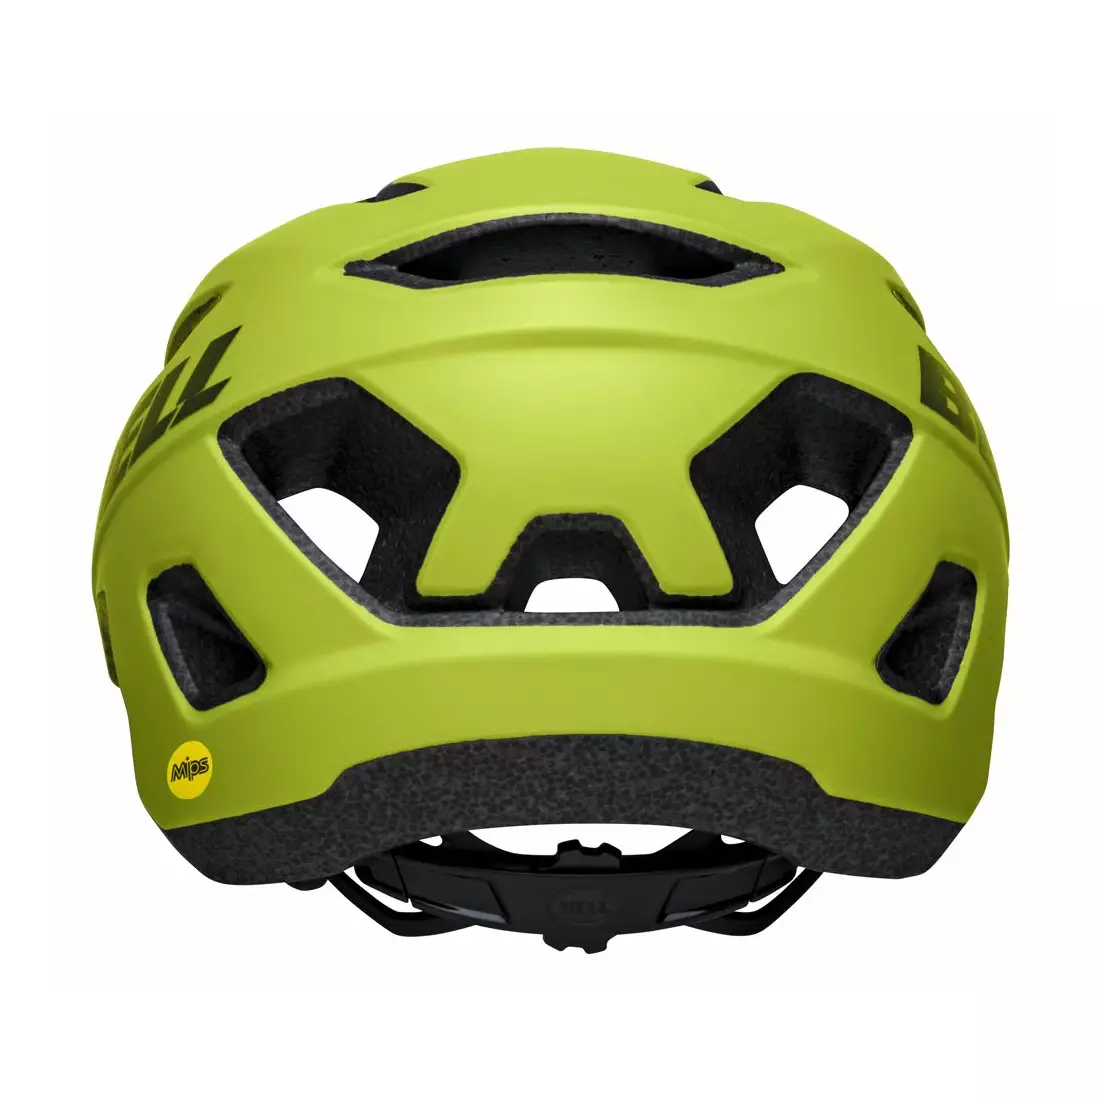 BELL NOMAD 2 JUNIOR children's MTB bicycle helmet, matte hi-viz